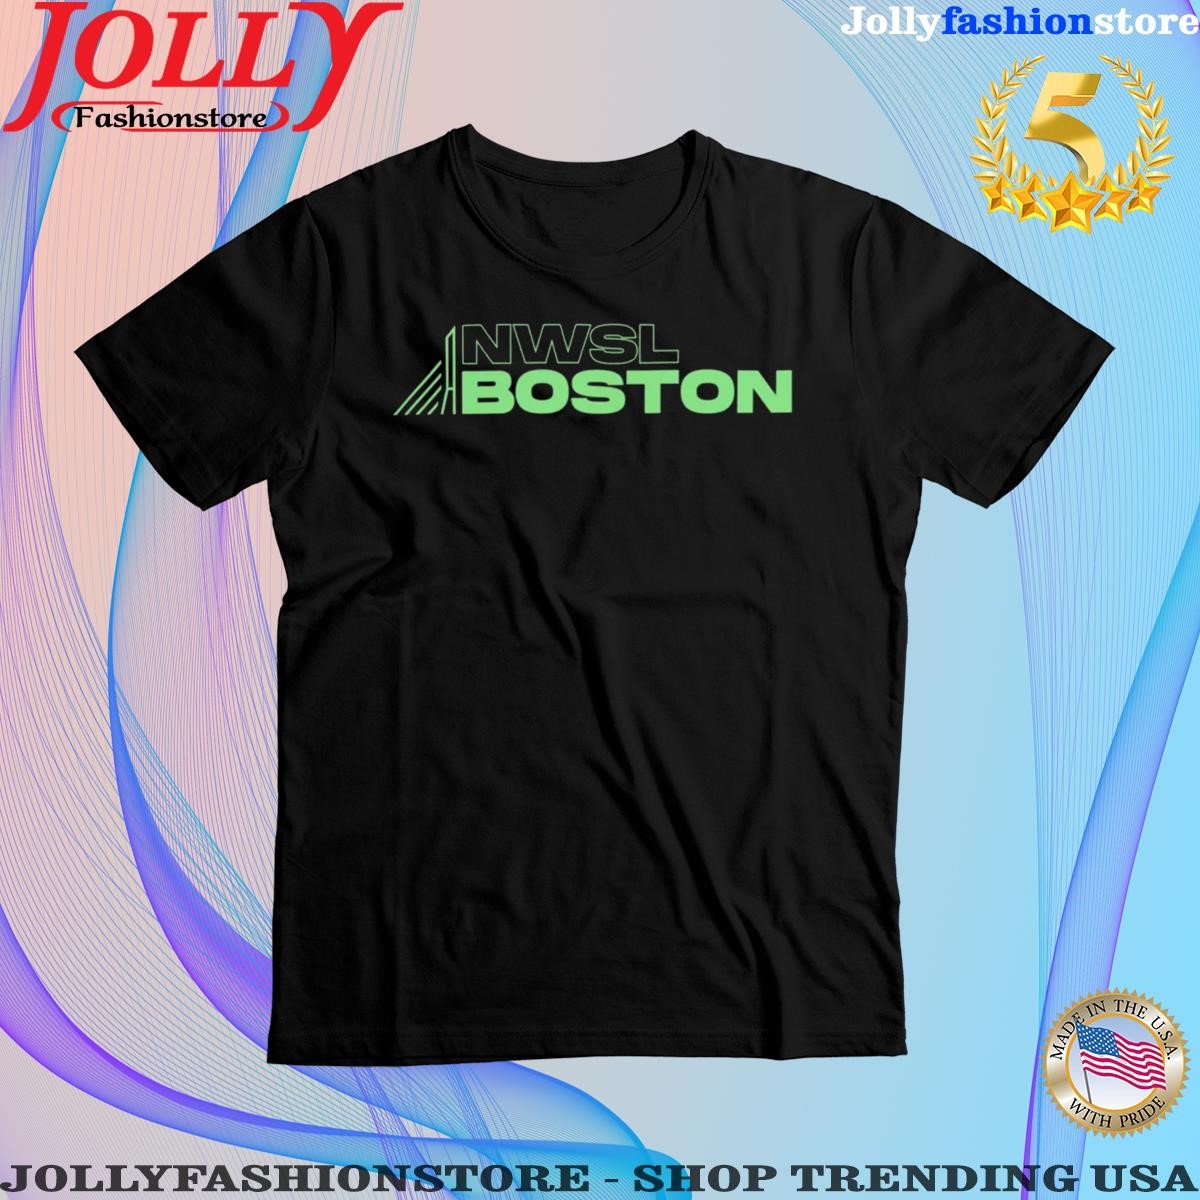 NWSL Boston Merch Club Shirt